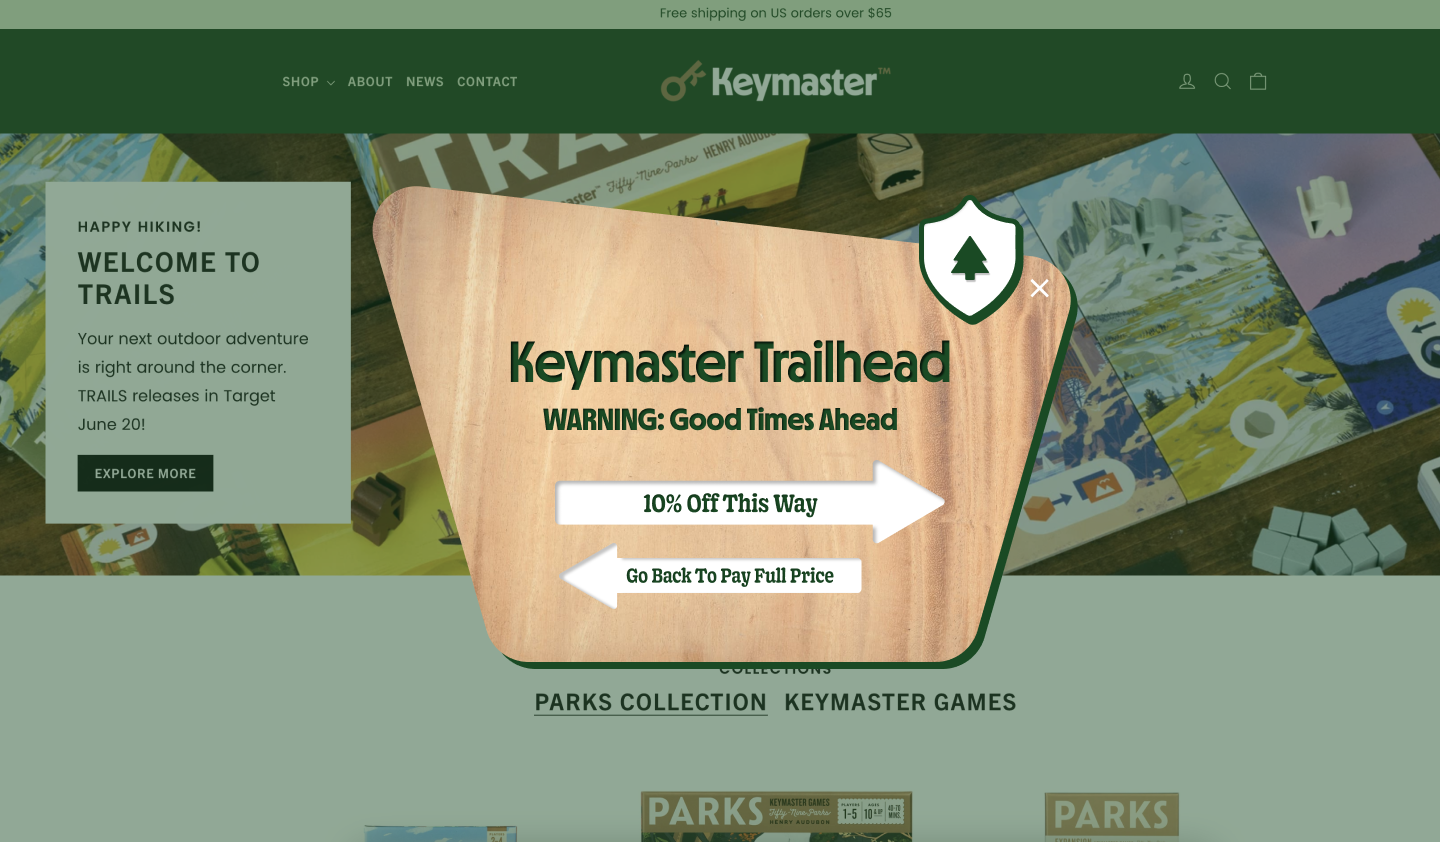 Keymaster games pop-up